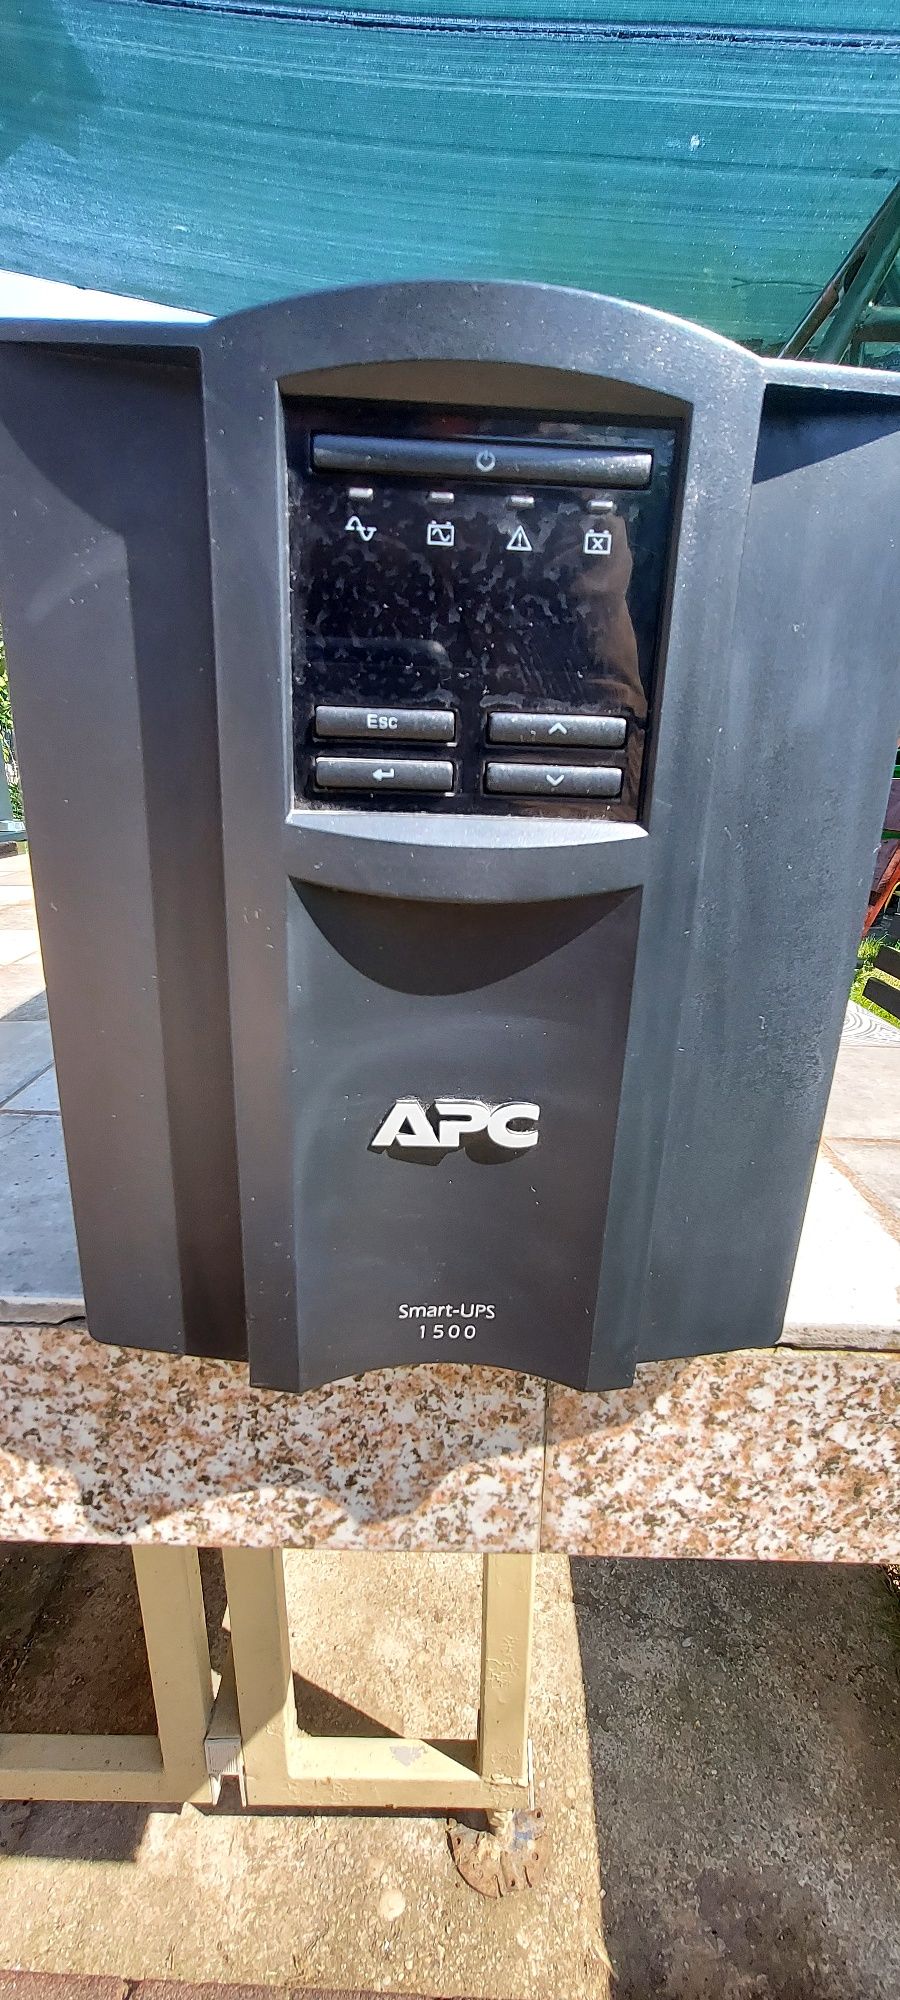 UPC APC Smart 1500